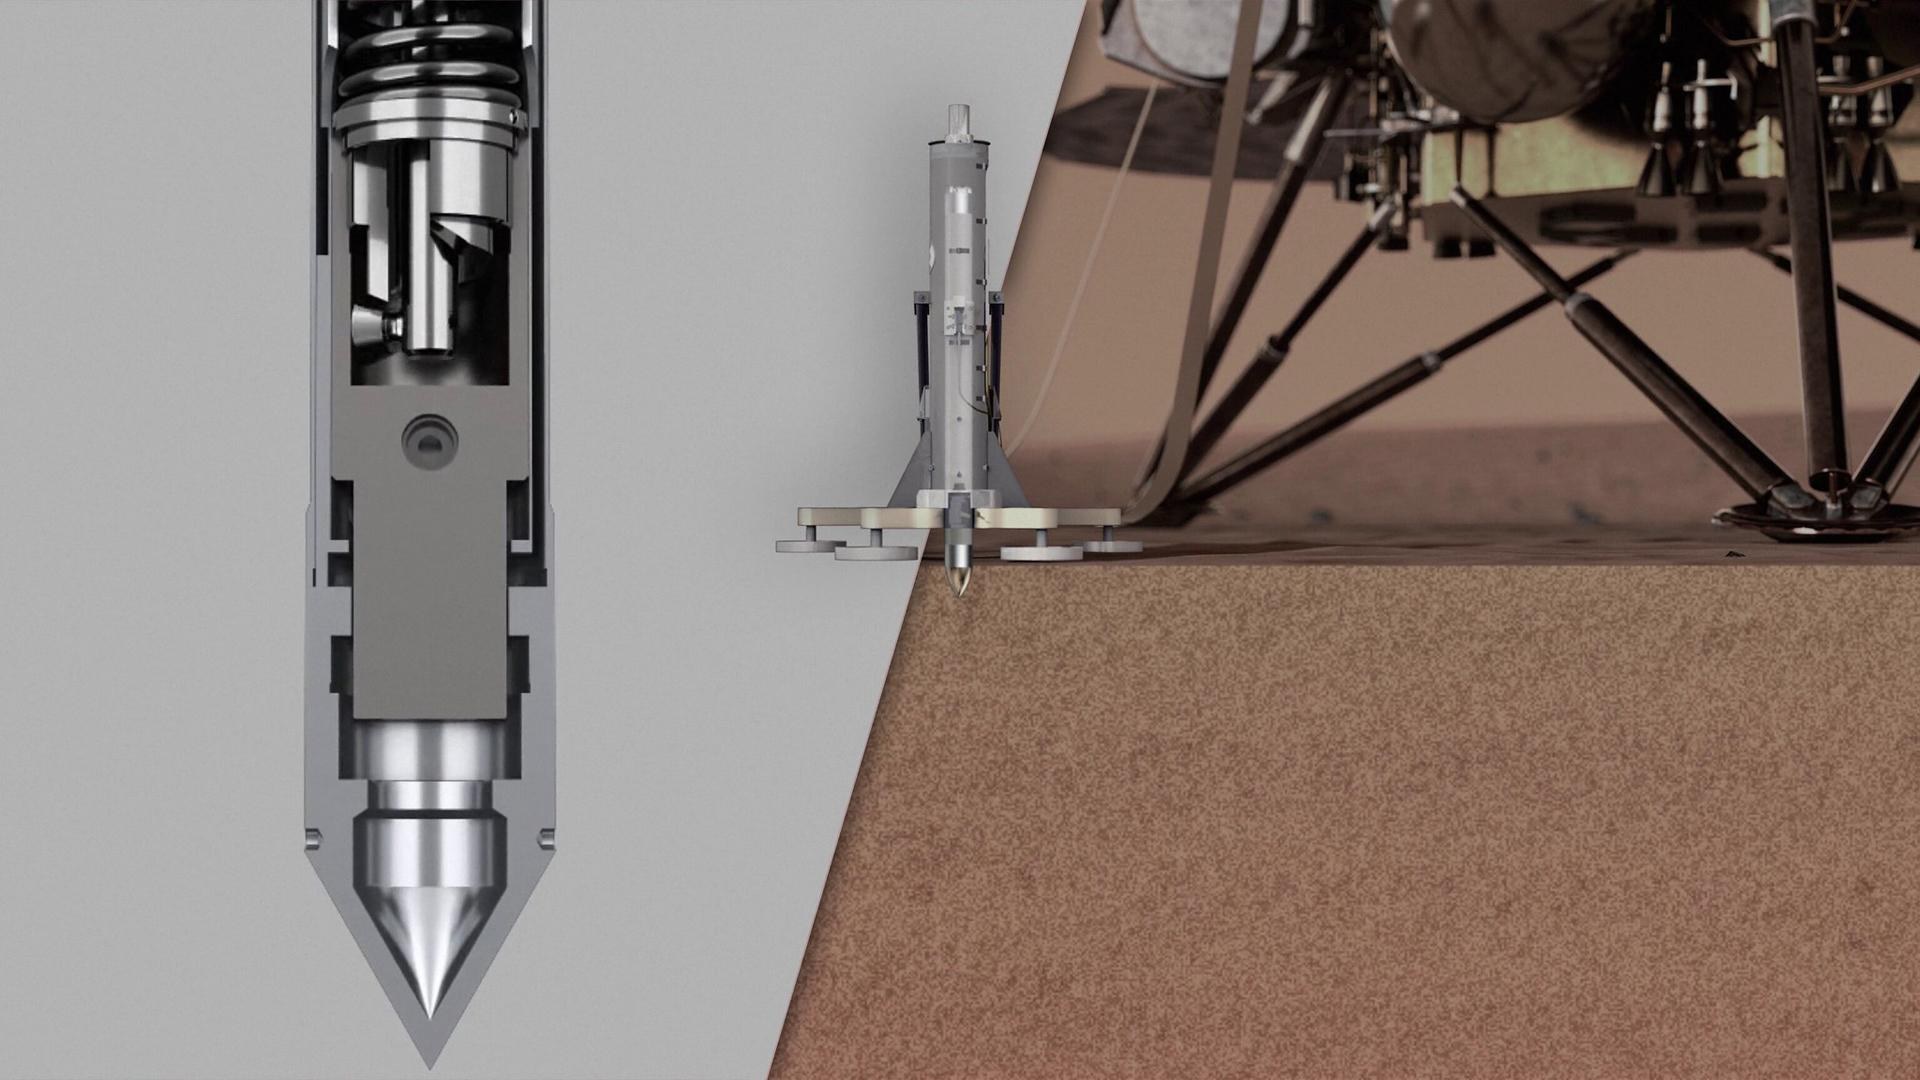 Hammer mechanism of the DLR Mars 'Mole'